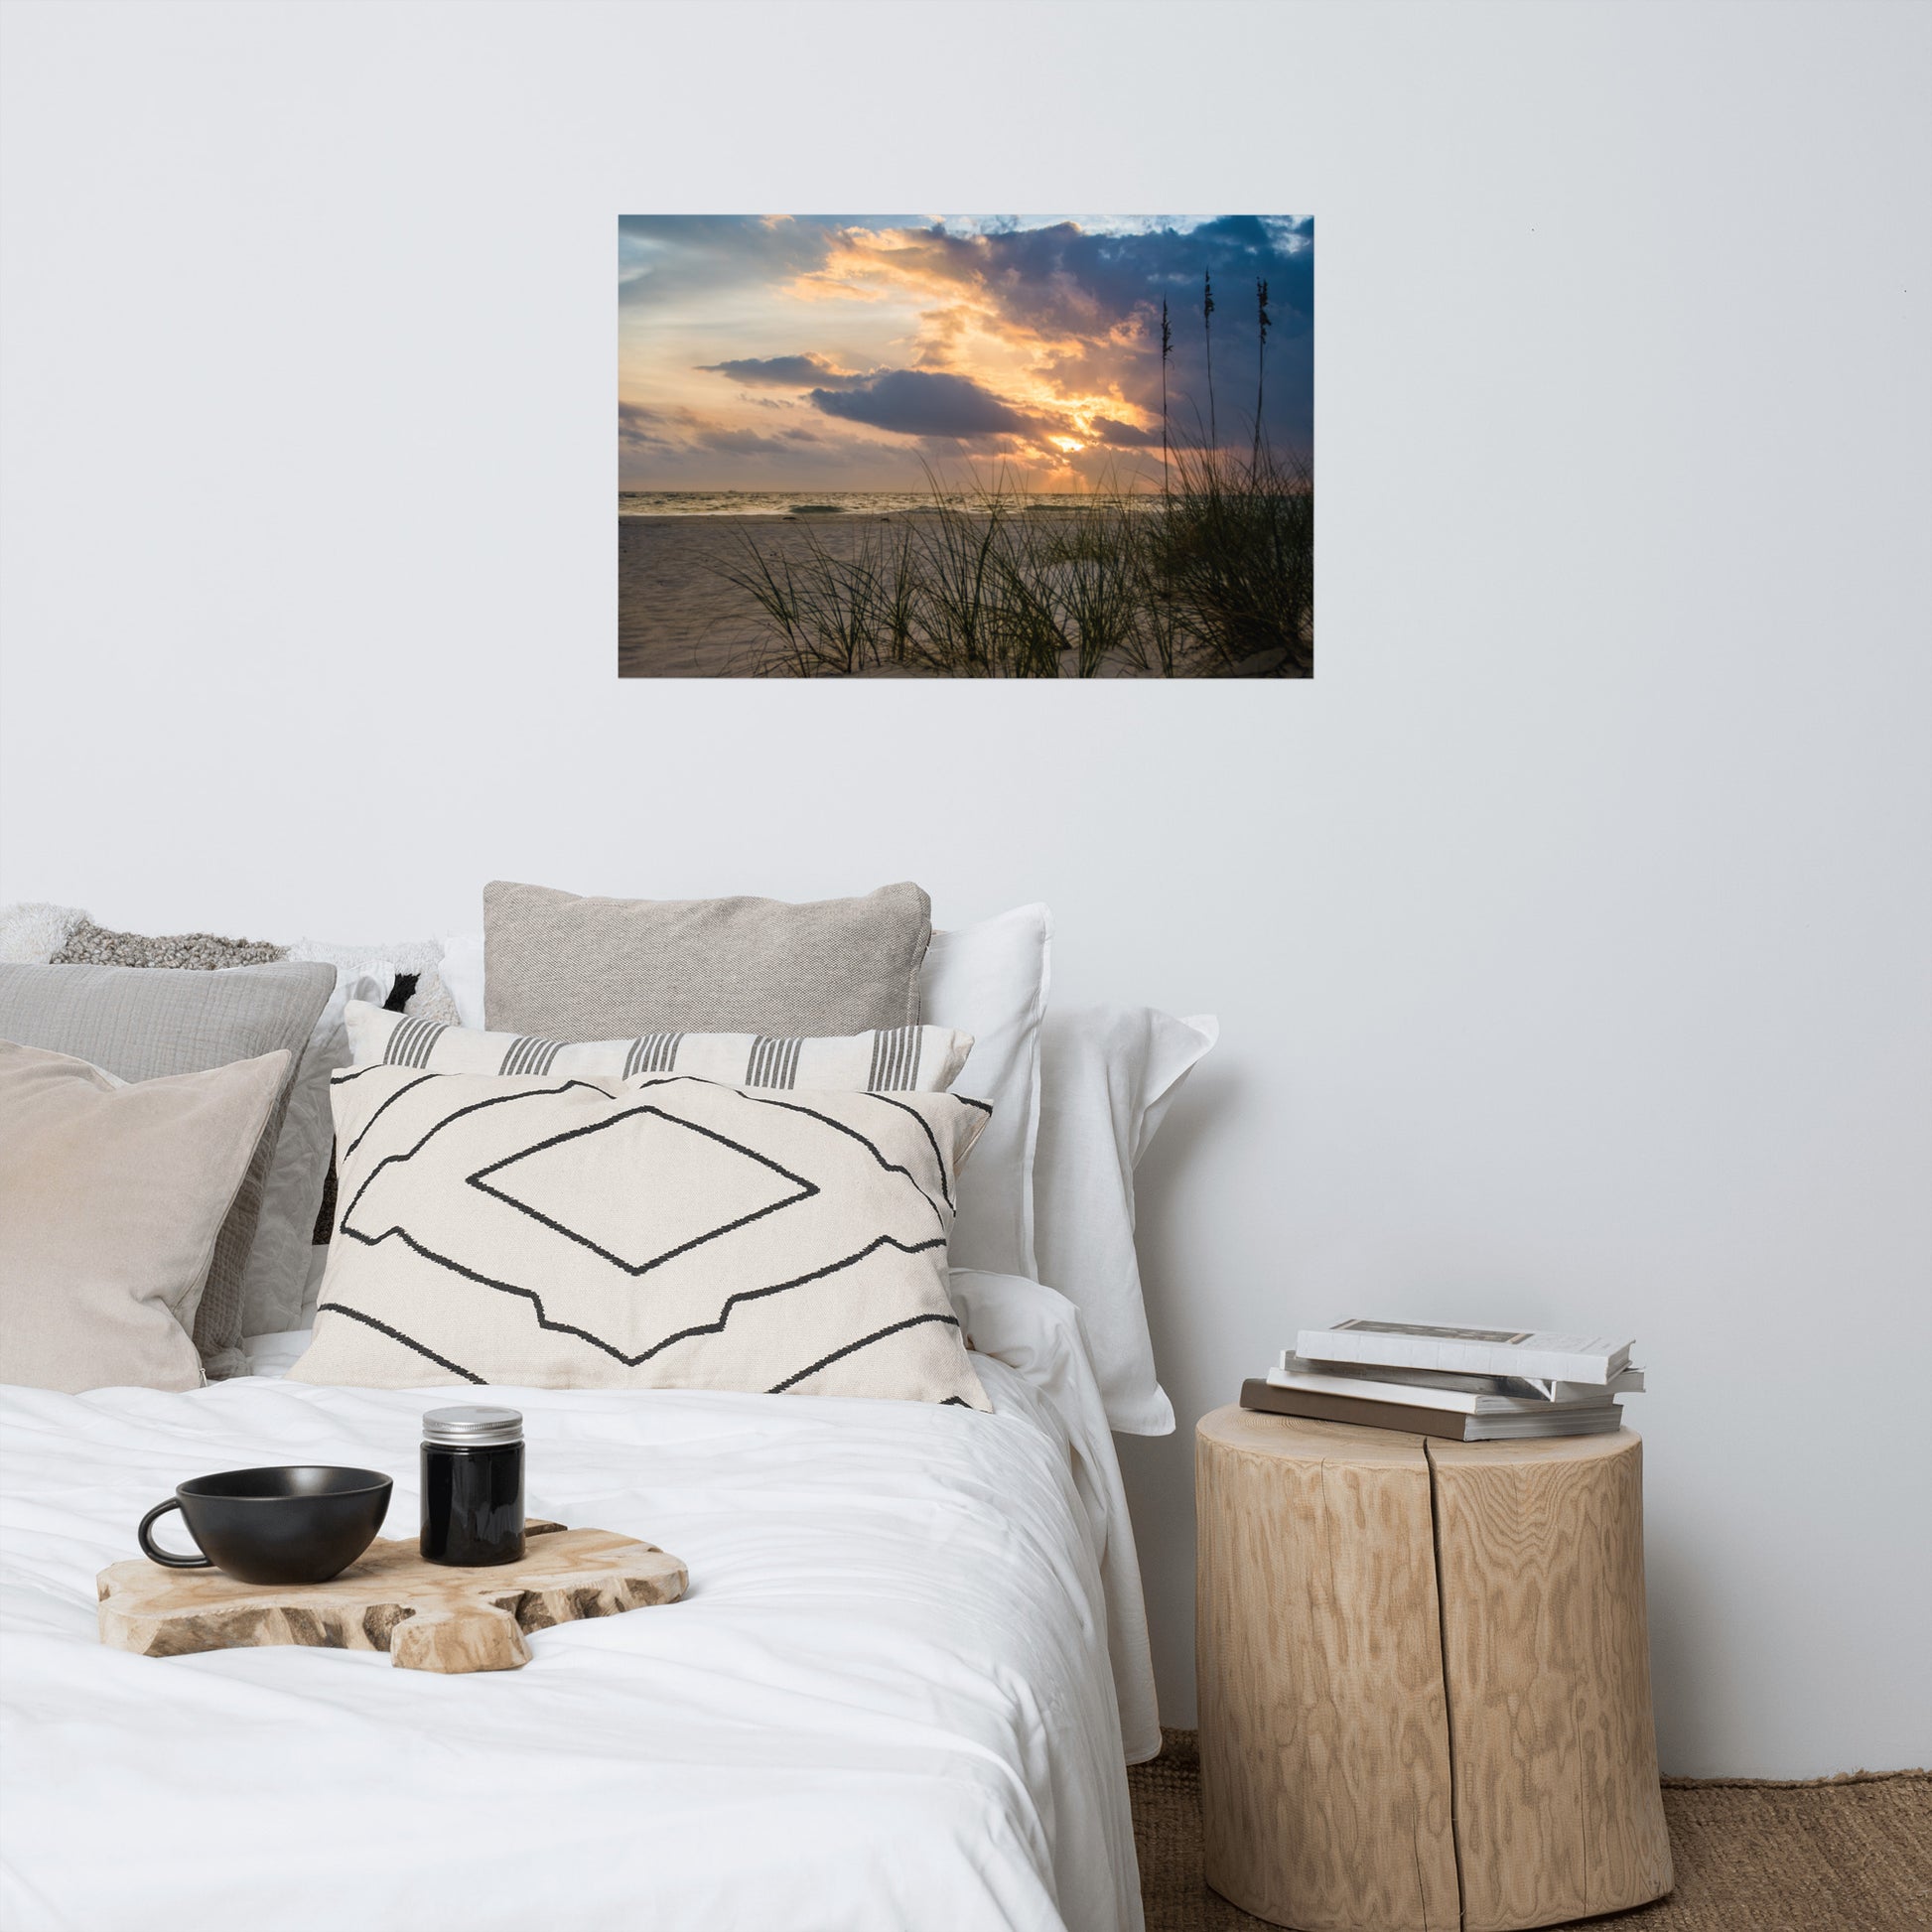 Neutral Beach Wall Art: Peaceful Cloudy Sunset on Beach - Coastal / Seascape / Nature / Landscape Photograph Loose / Unframed / Frameless / Frameable Wall Art Print - Artwork